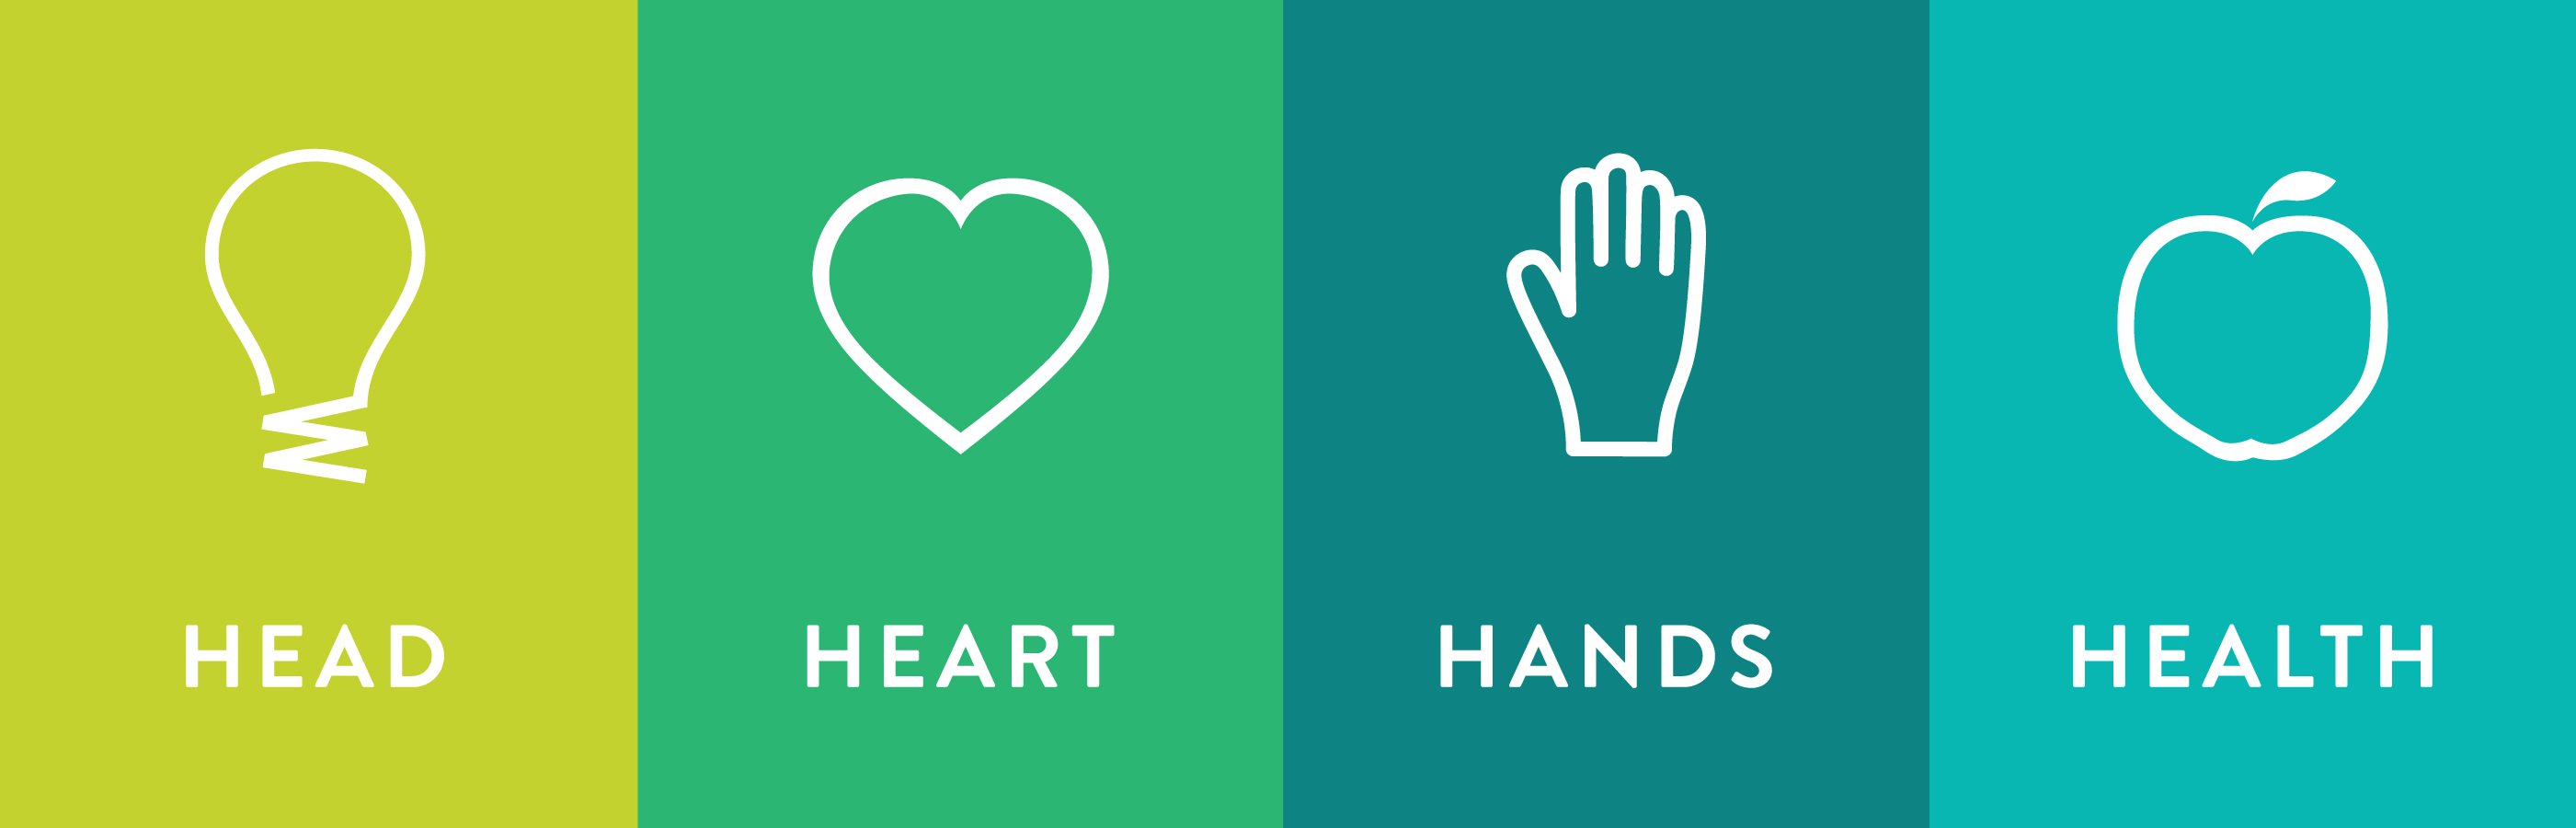 Head, Heart, Hands & Health icons